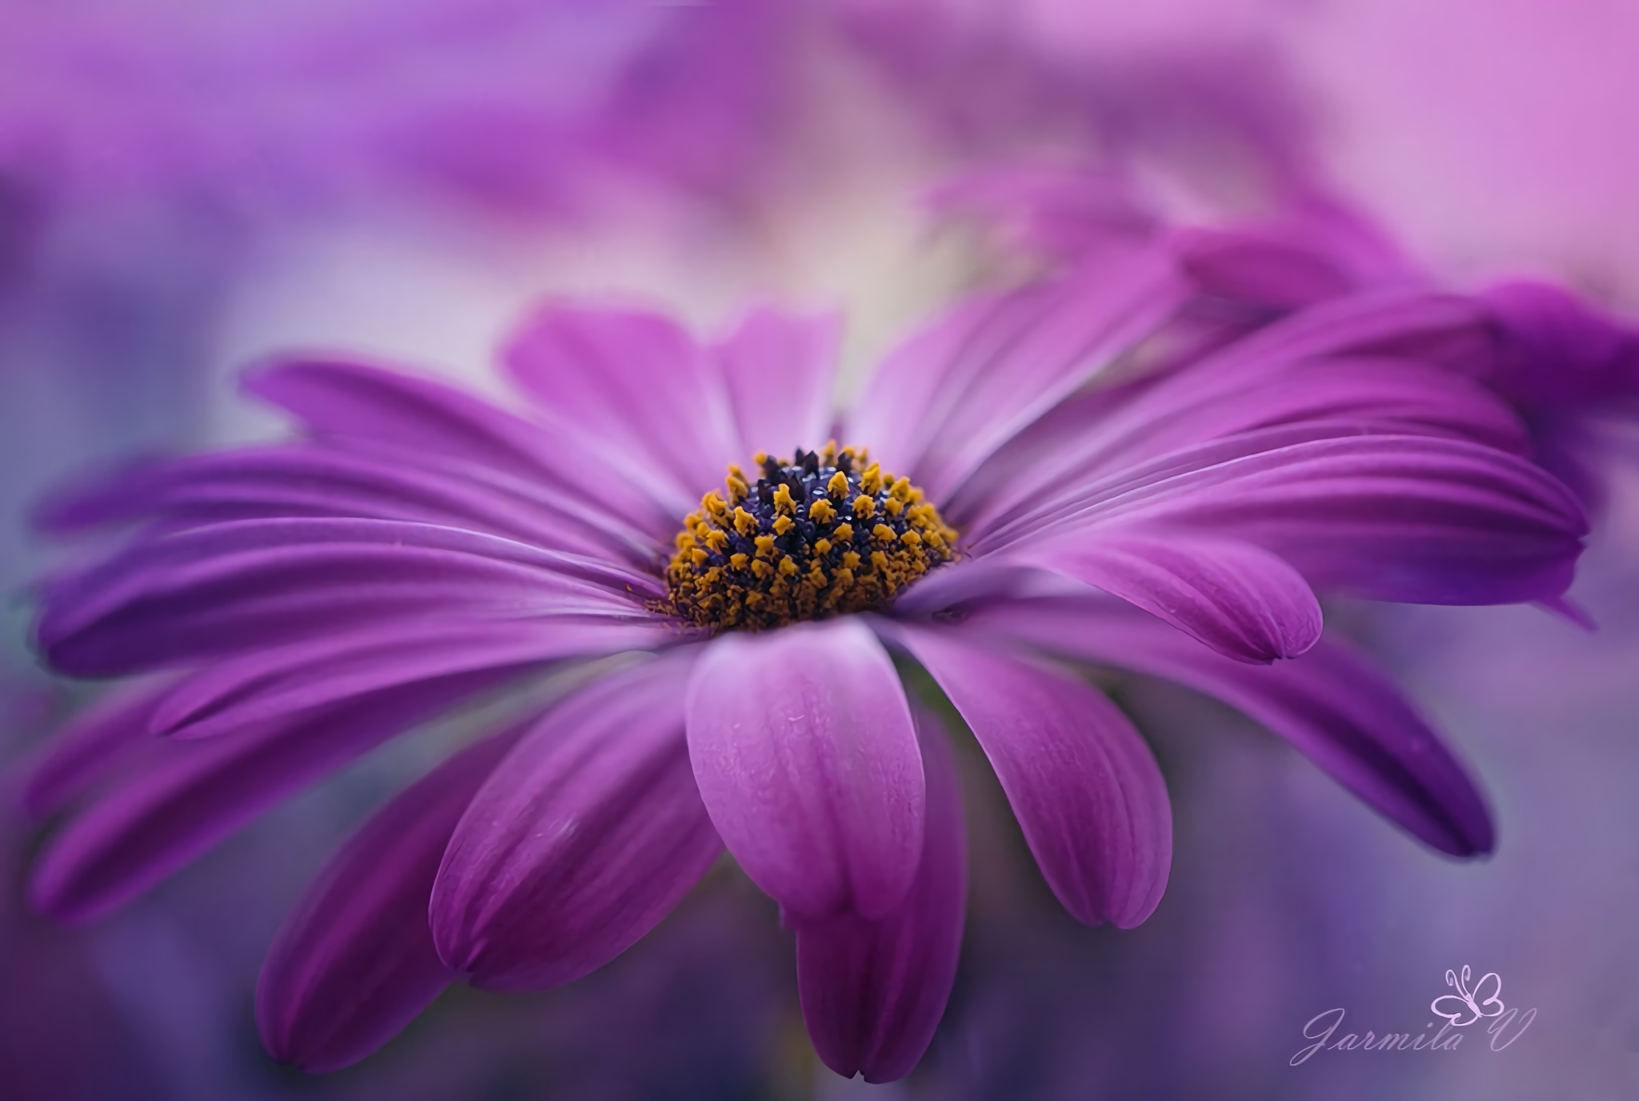 purple daisy png